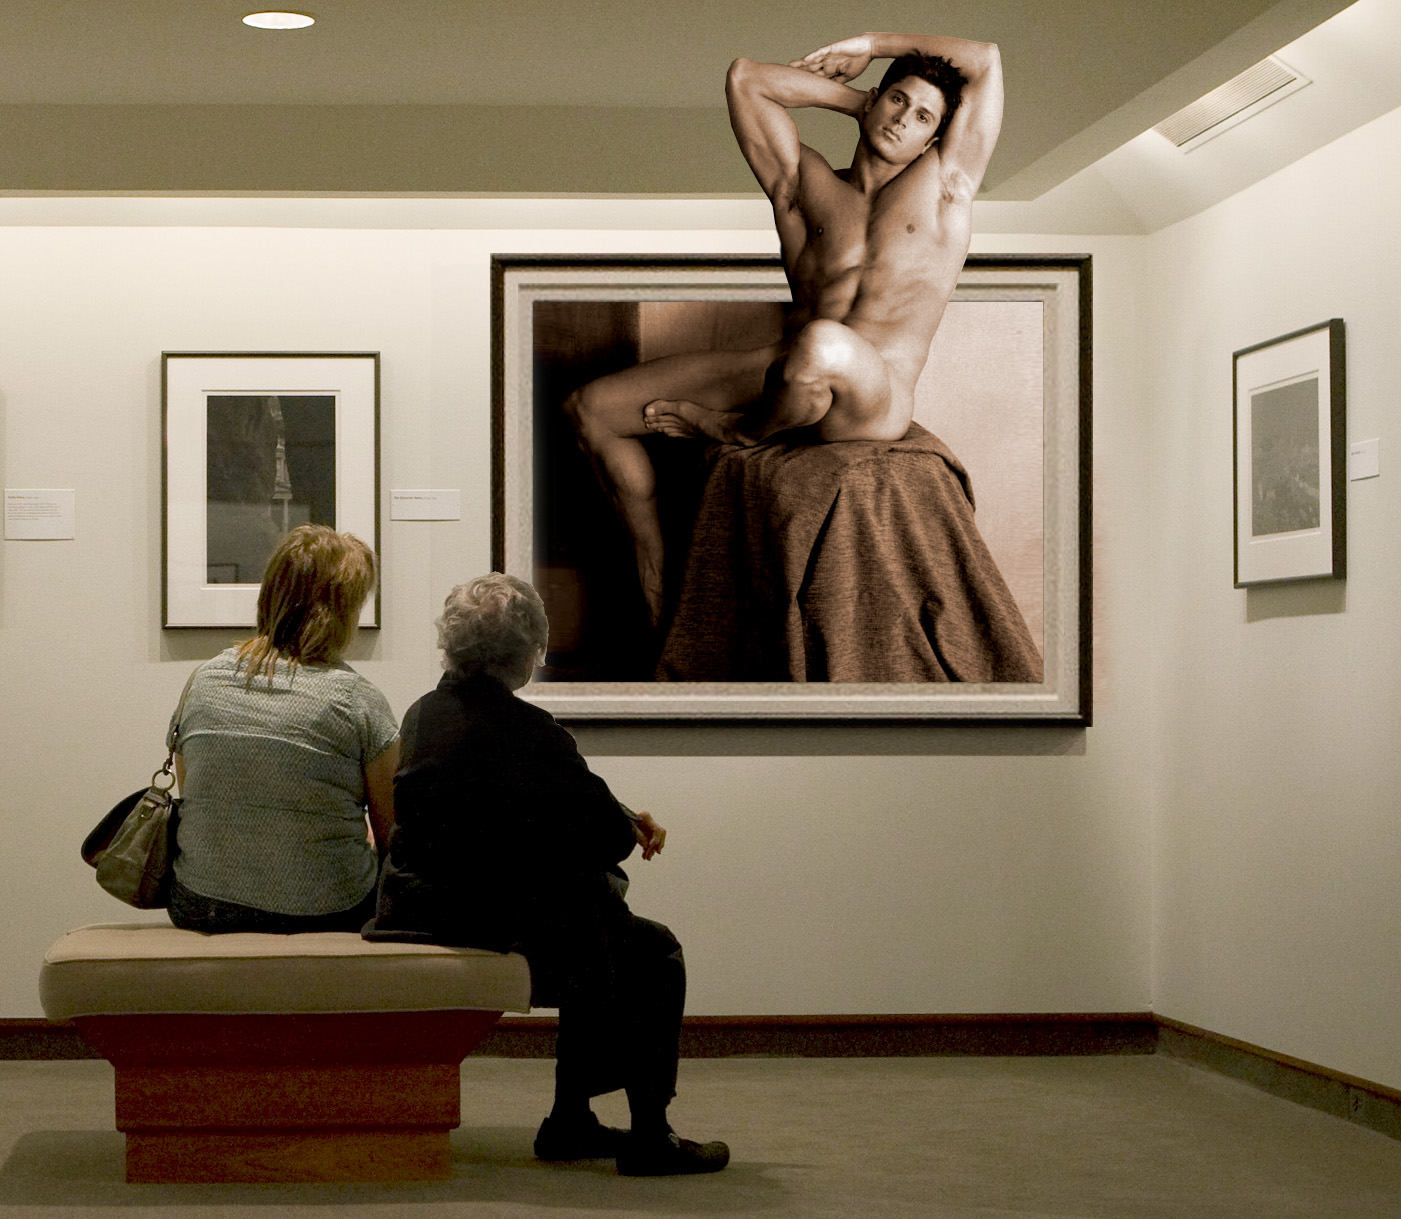 Art Gallery of Masculine Beauty & Homo Eroticism